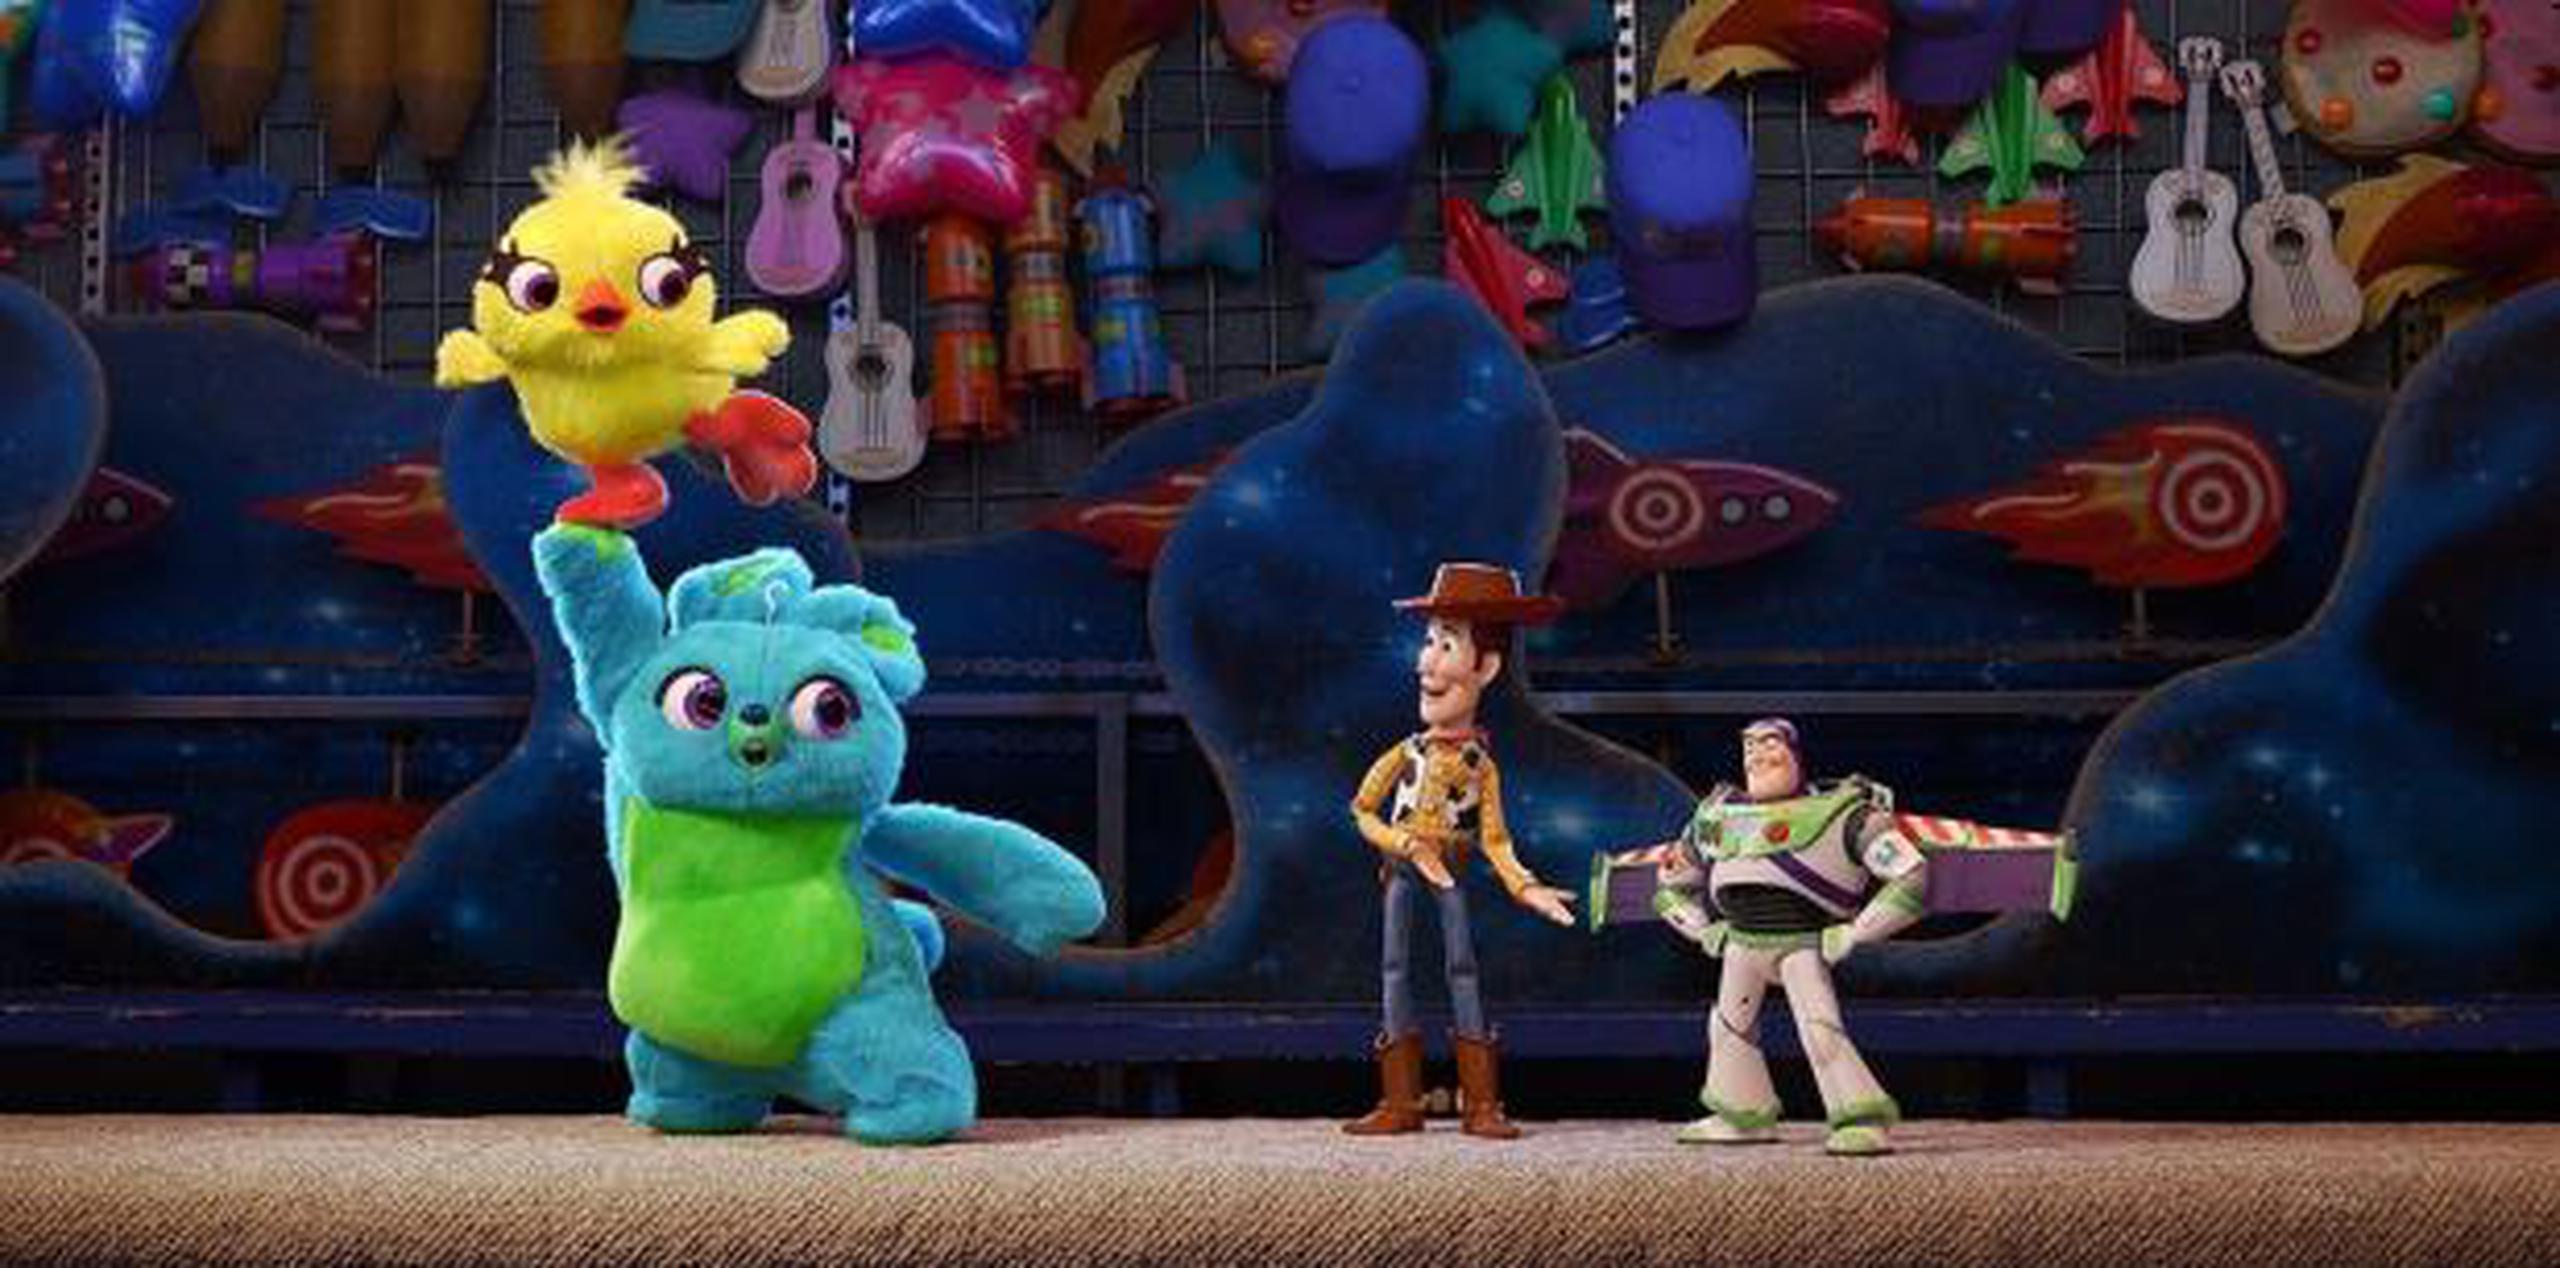 Ducky, Bunny, Woody y Buzz Lightyear en "Toy Story 4". (Disney Pixar)